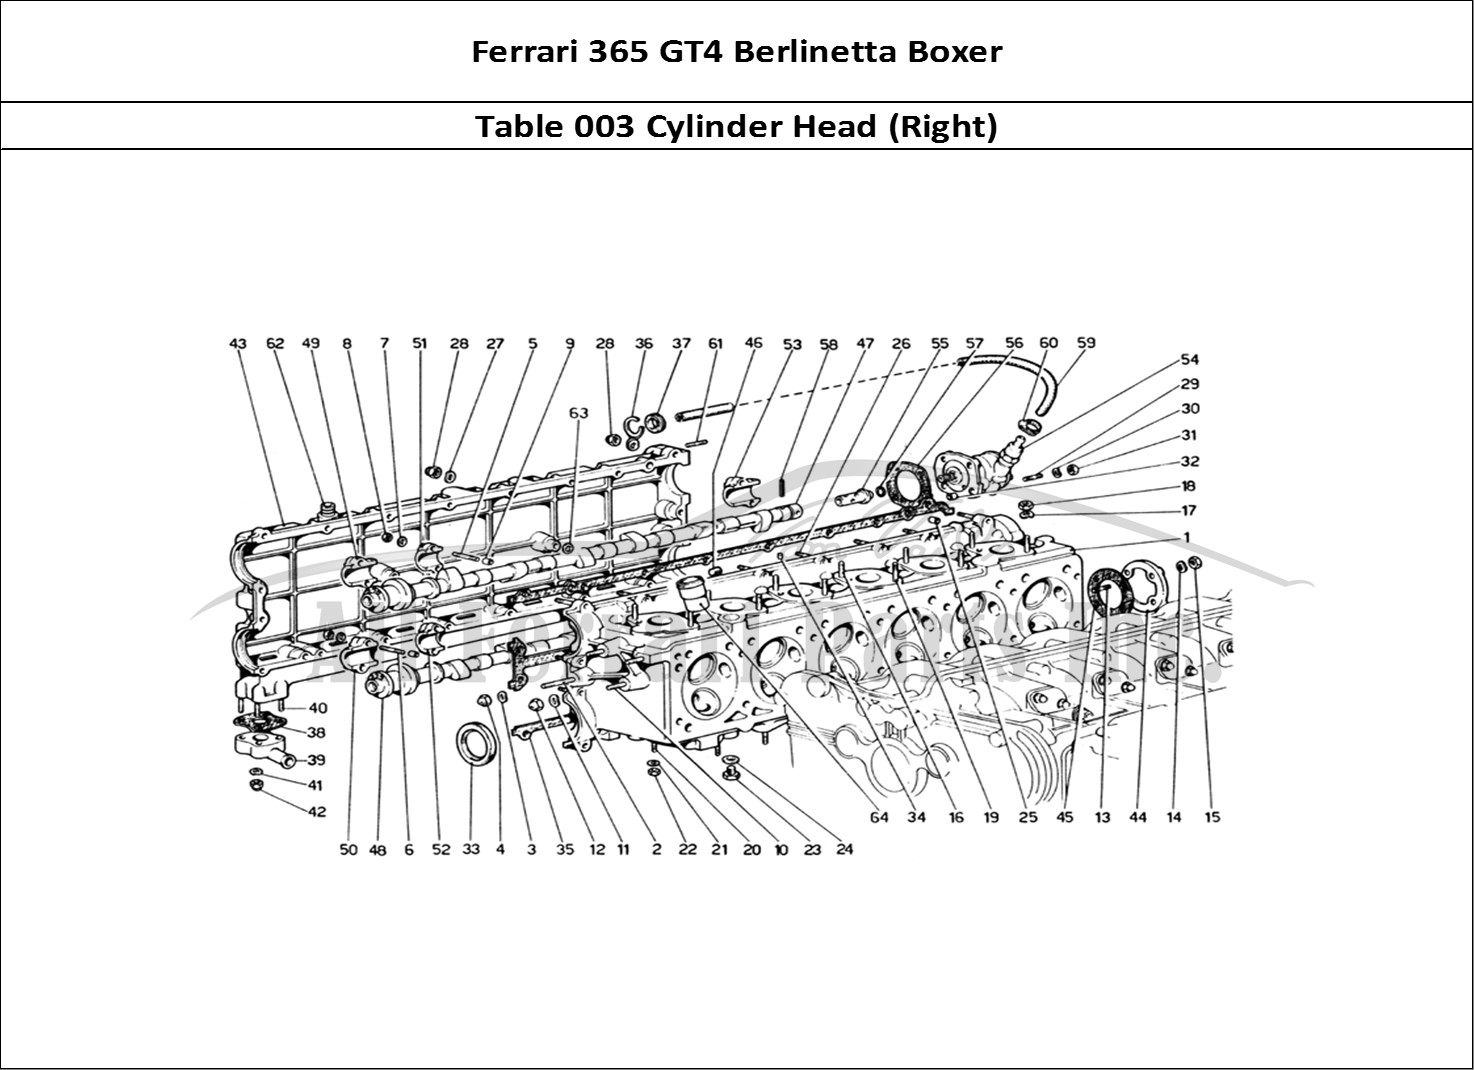 Ferrari Parts Ferrari 365 GT4 Berlinetta Boxer Page 003 Cylinder Head (Right)